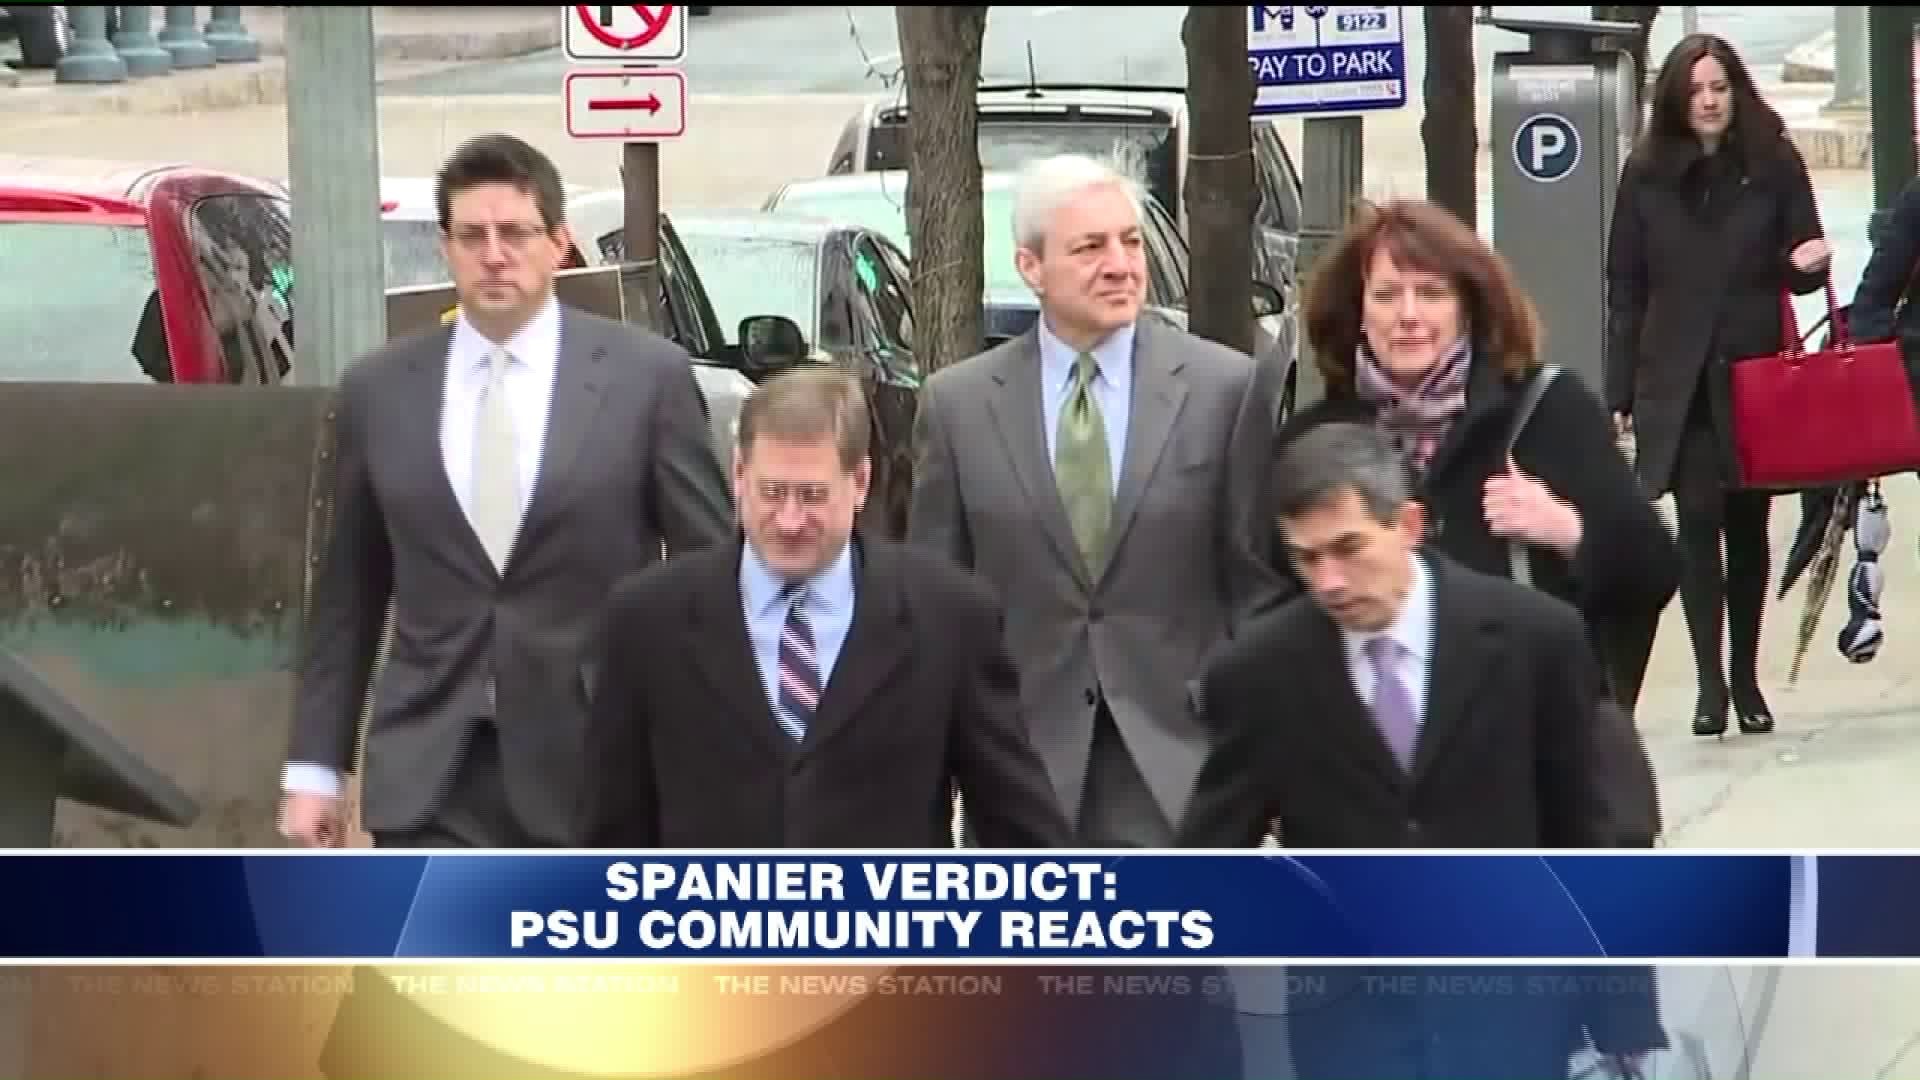 Spanier Verdict: PSU Community Reacts